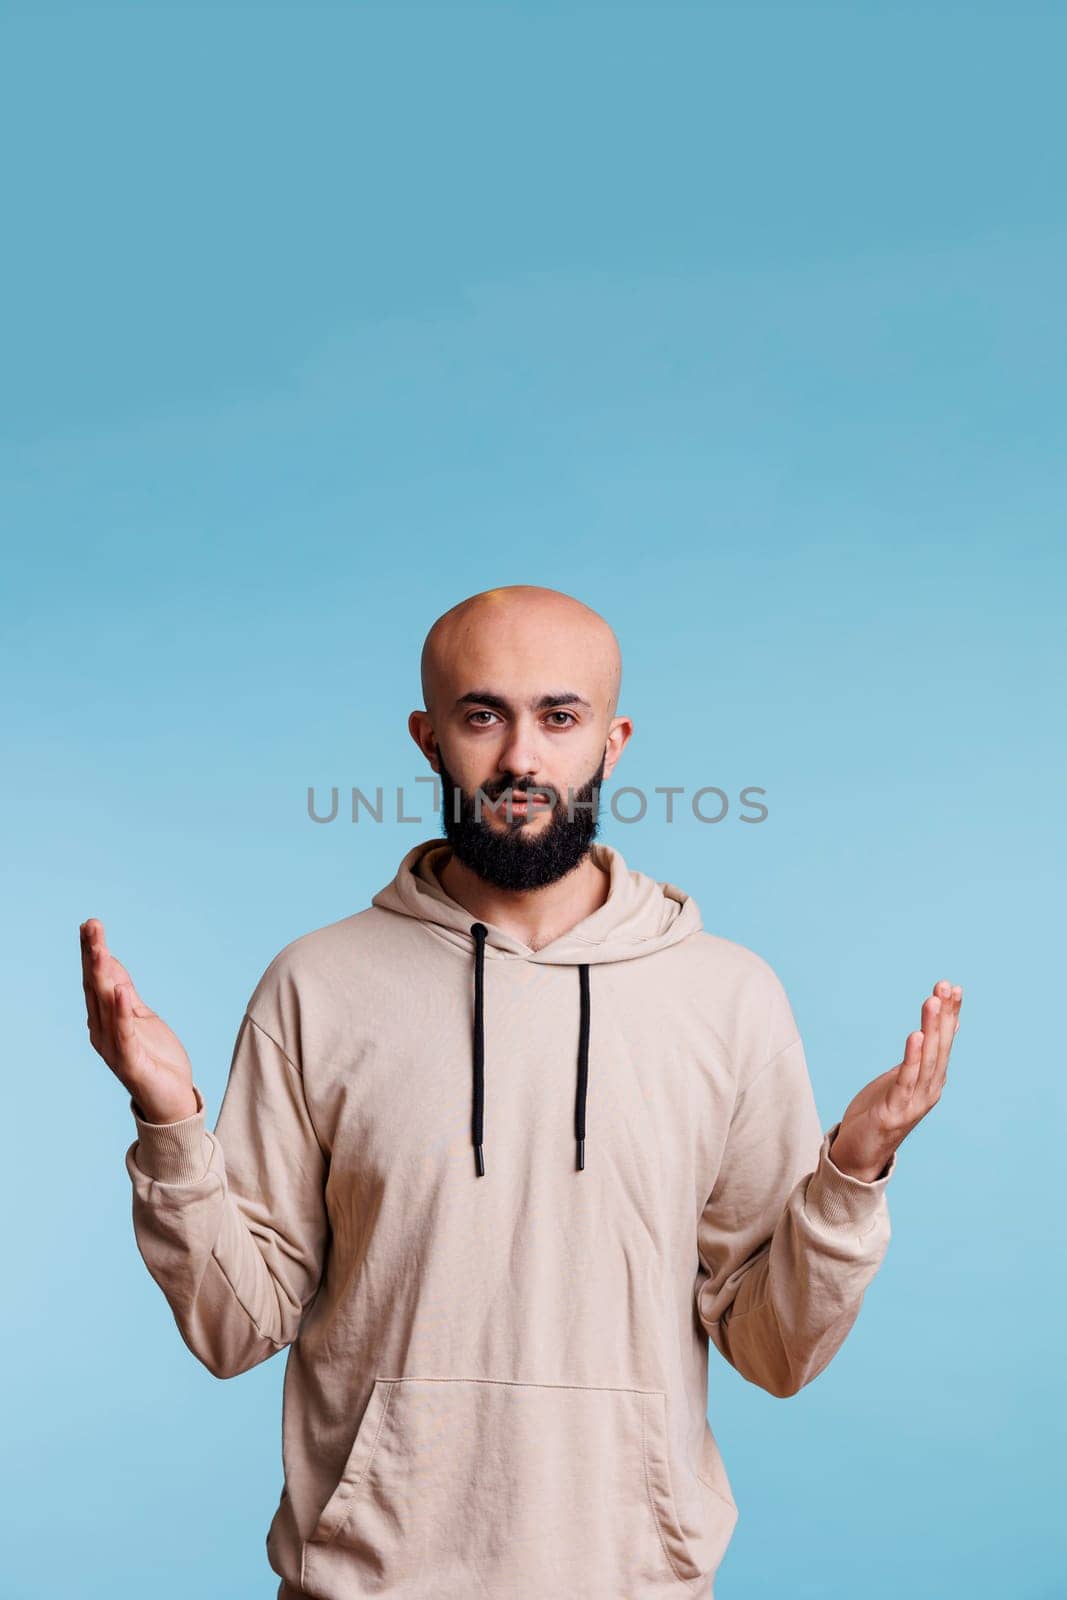 Arab man praying in spiritual gesture by DCStudio